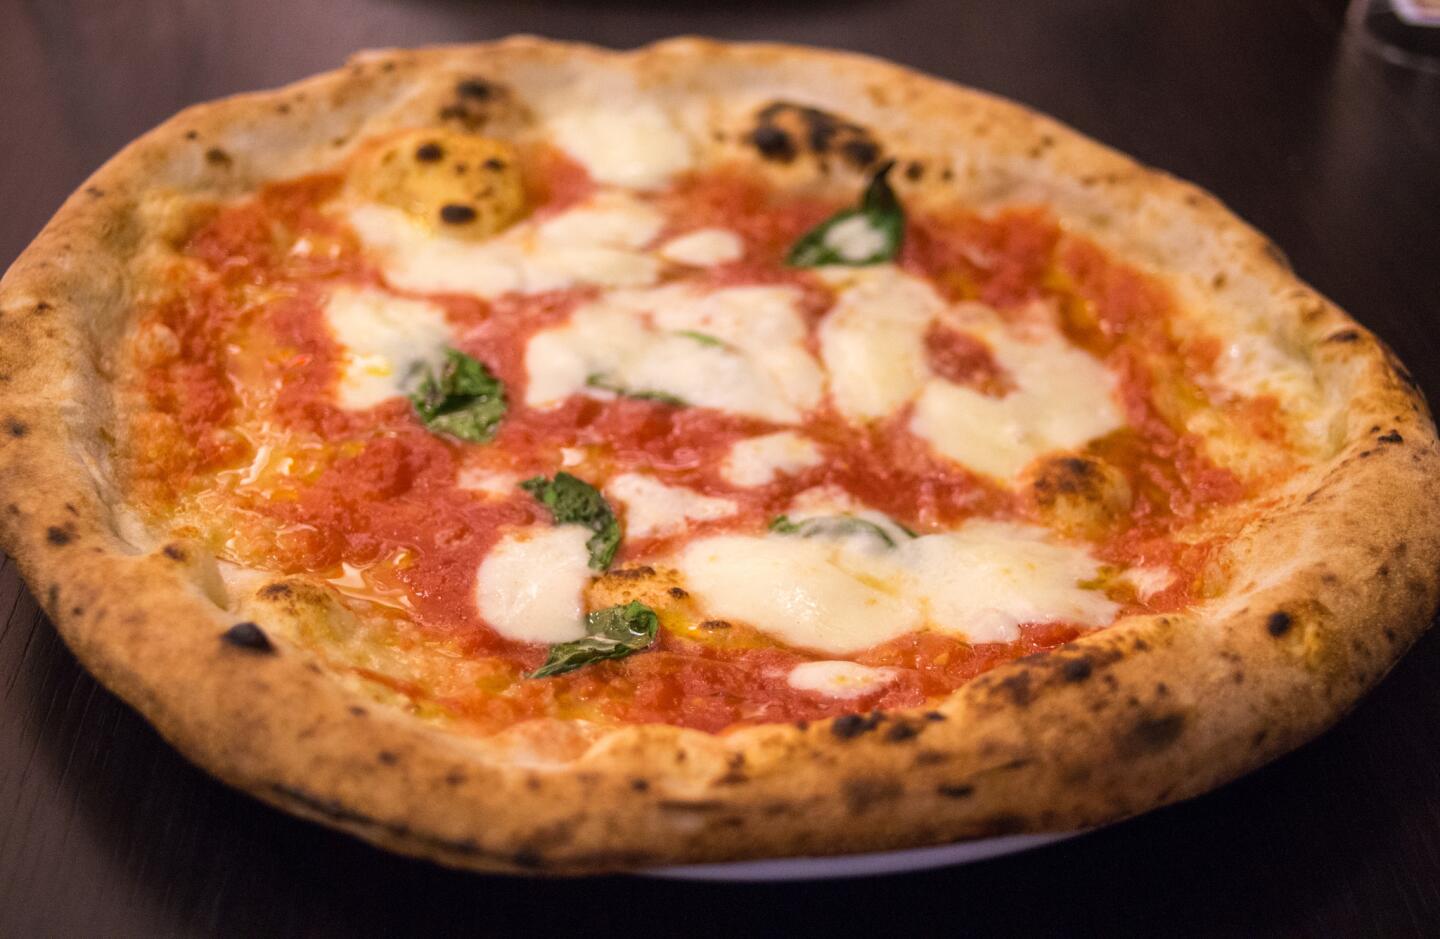 Pizza margherita in Naples, Italy